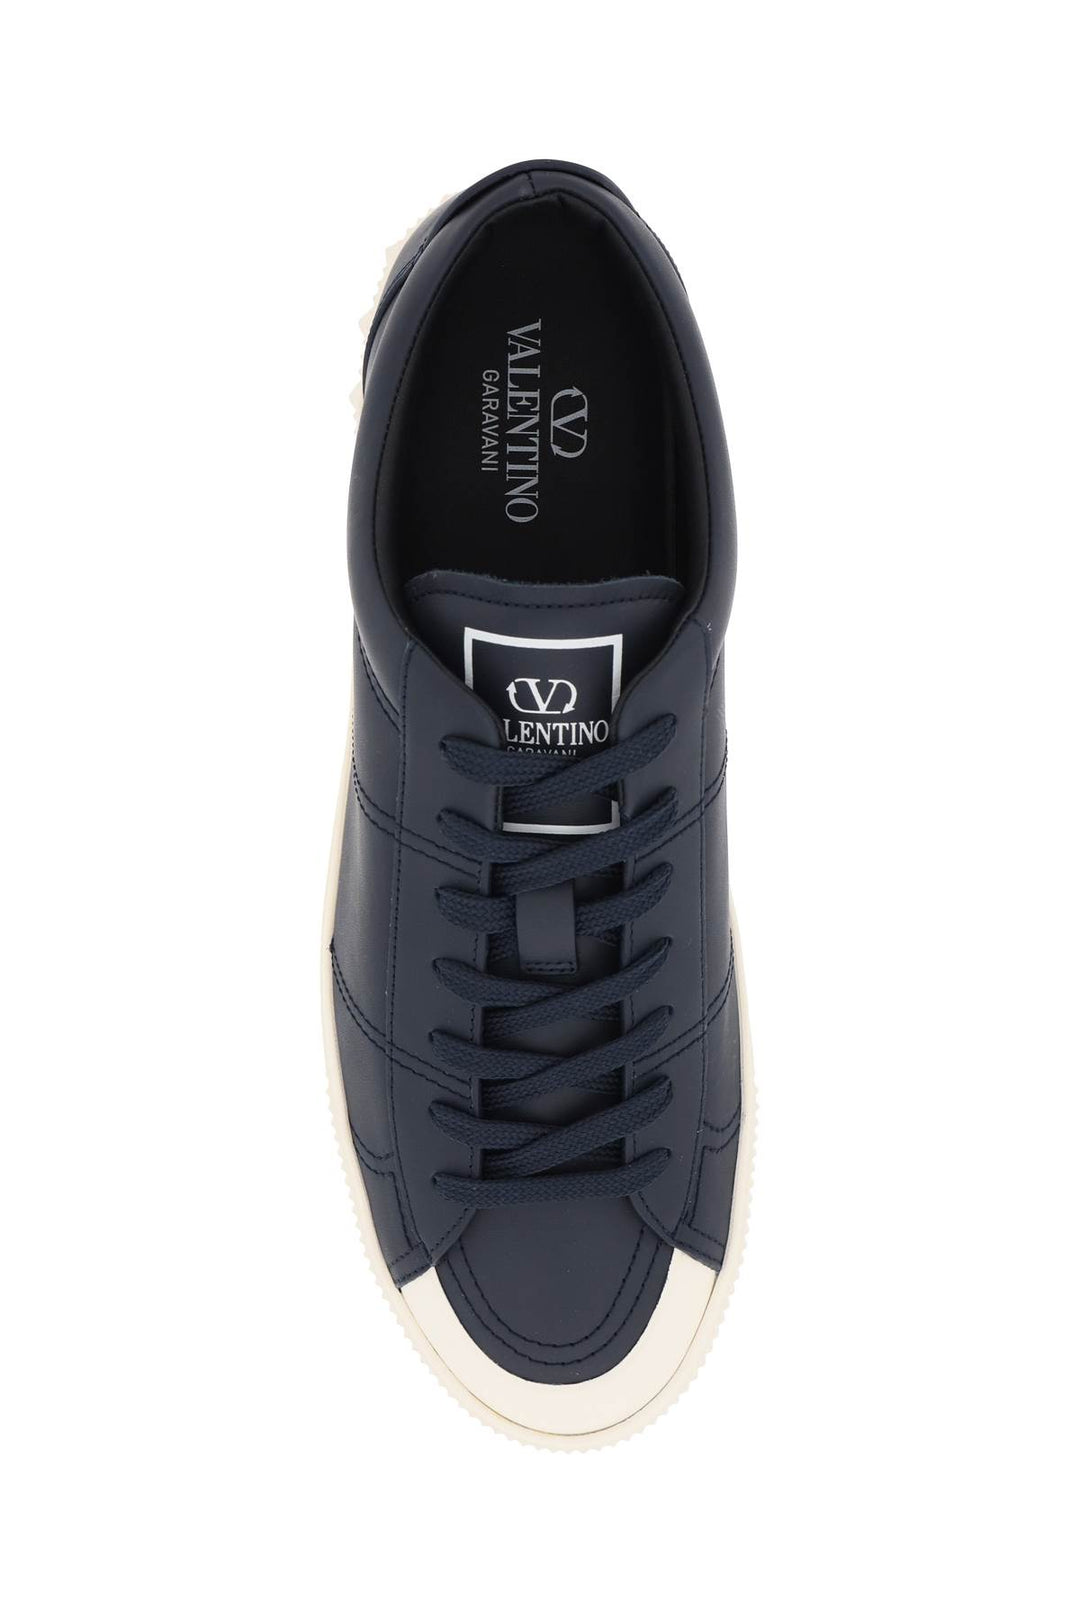 Valentino Garavani Leather Cityplanet Sneakers   Black